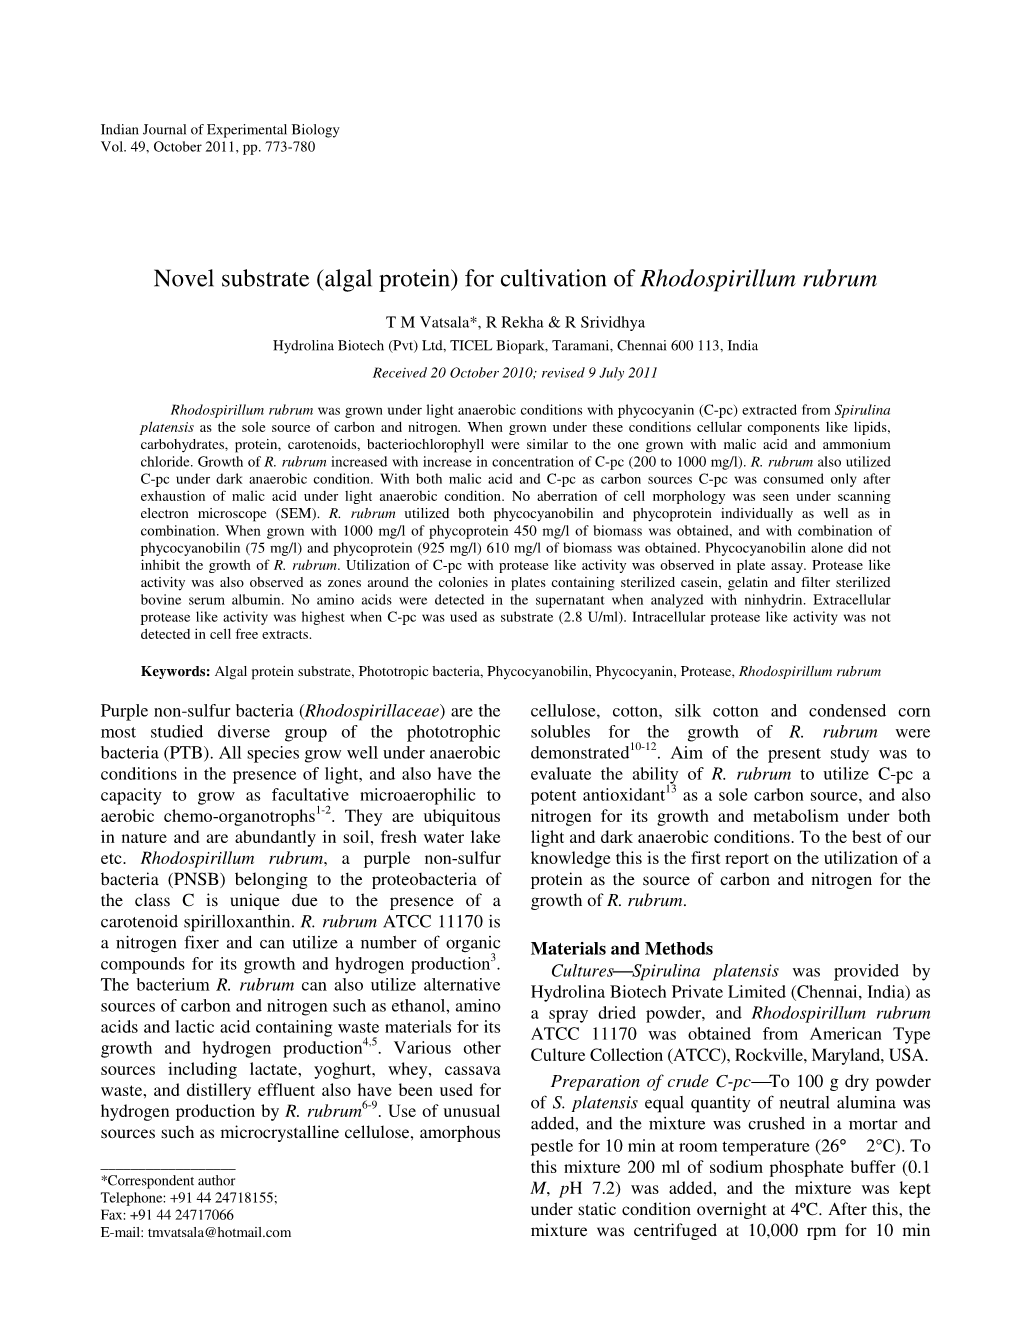 Novel Substrate (Algal Protein) for Cultivation of Rhodospirillum Rubrum